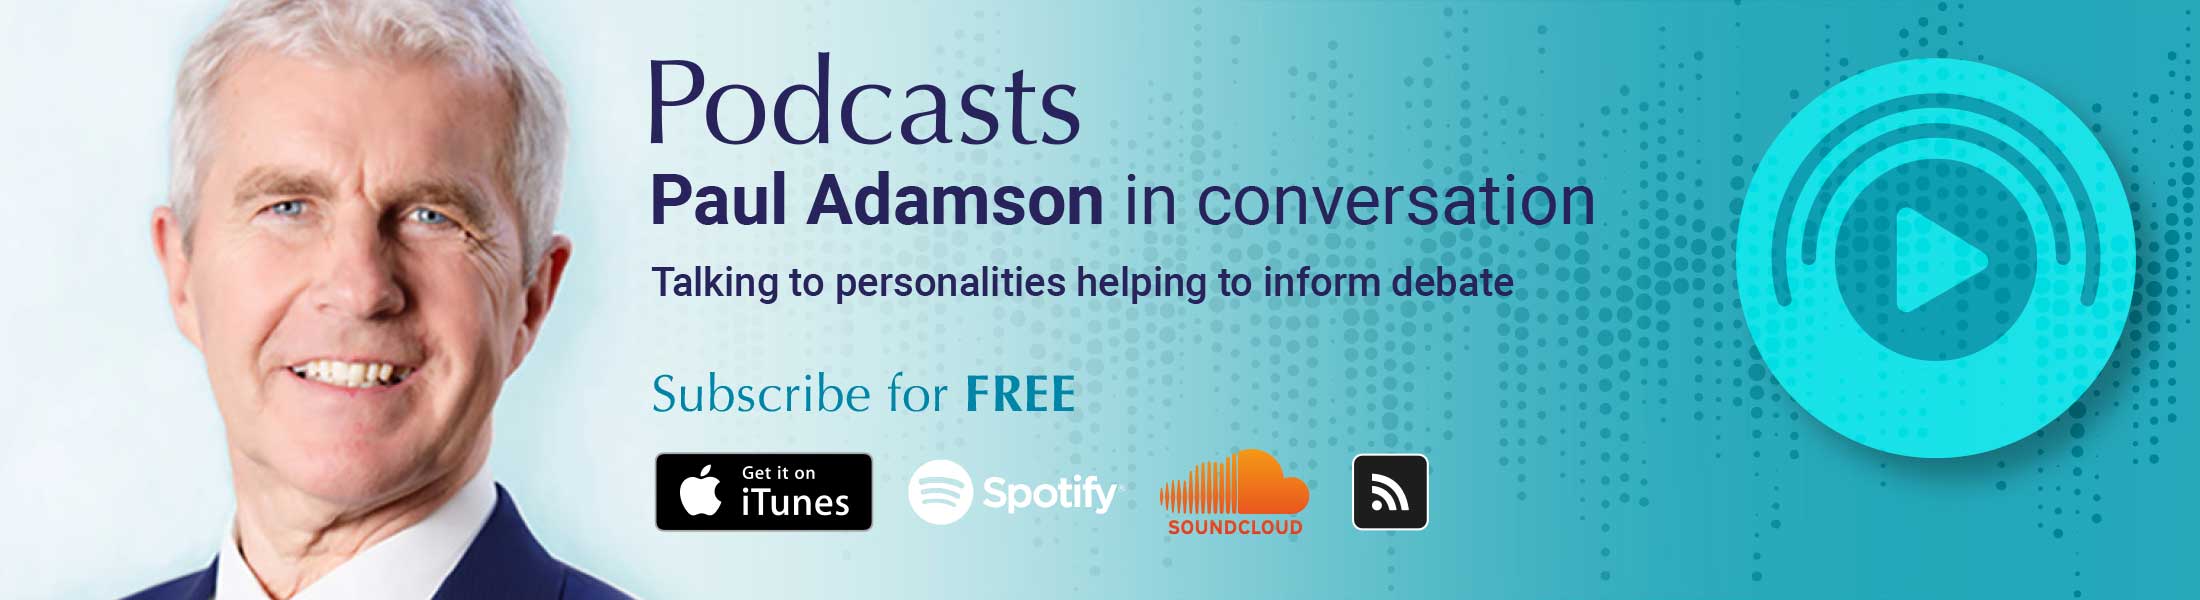 Podcasts: Paul Adamson in conversation